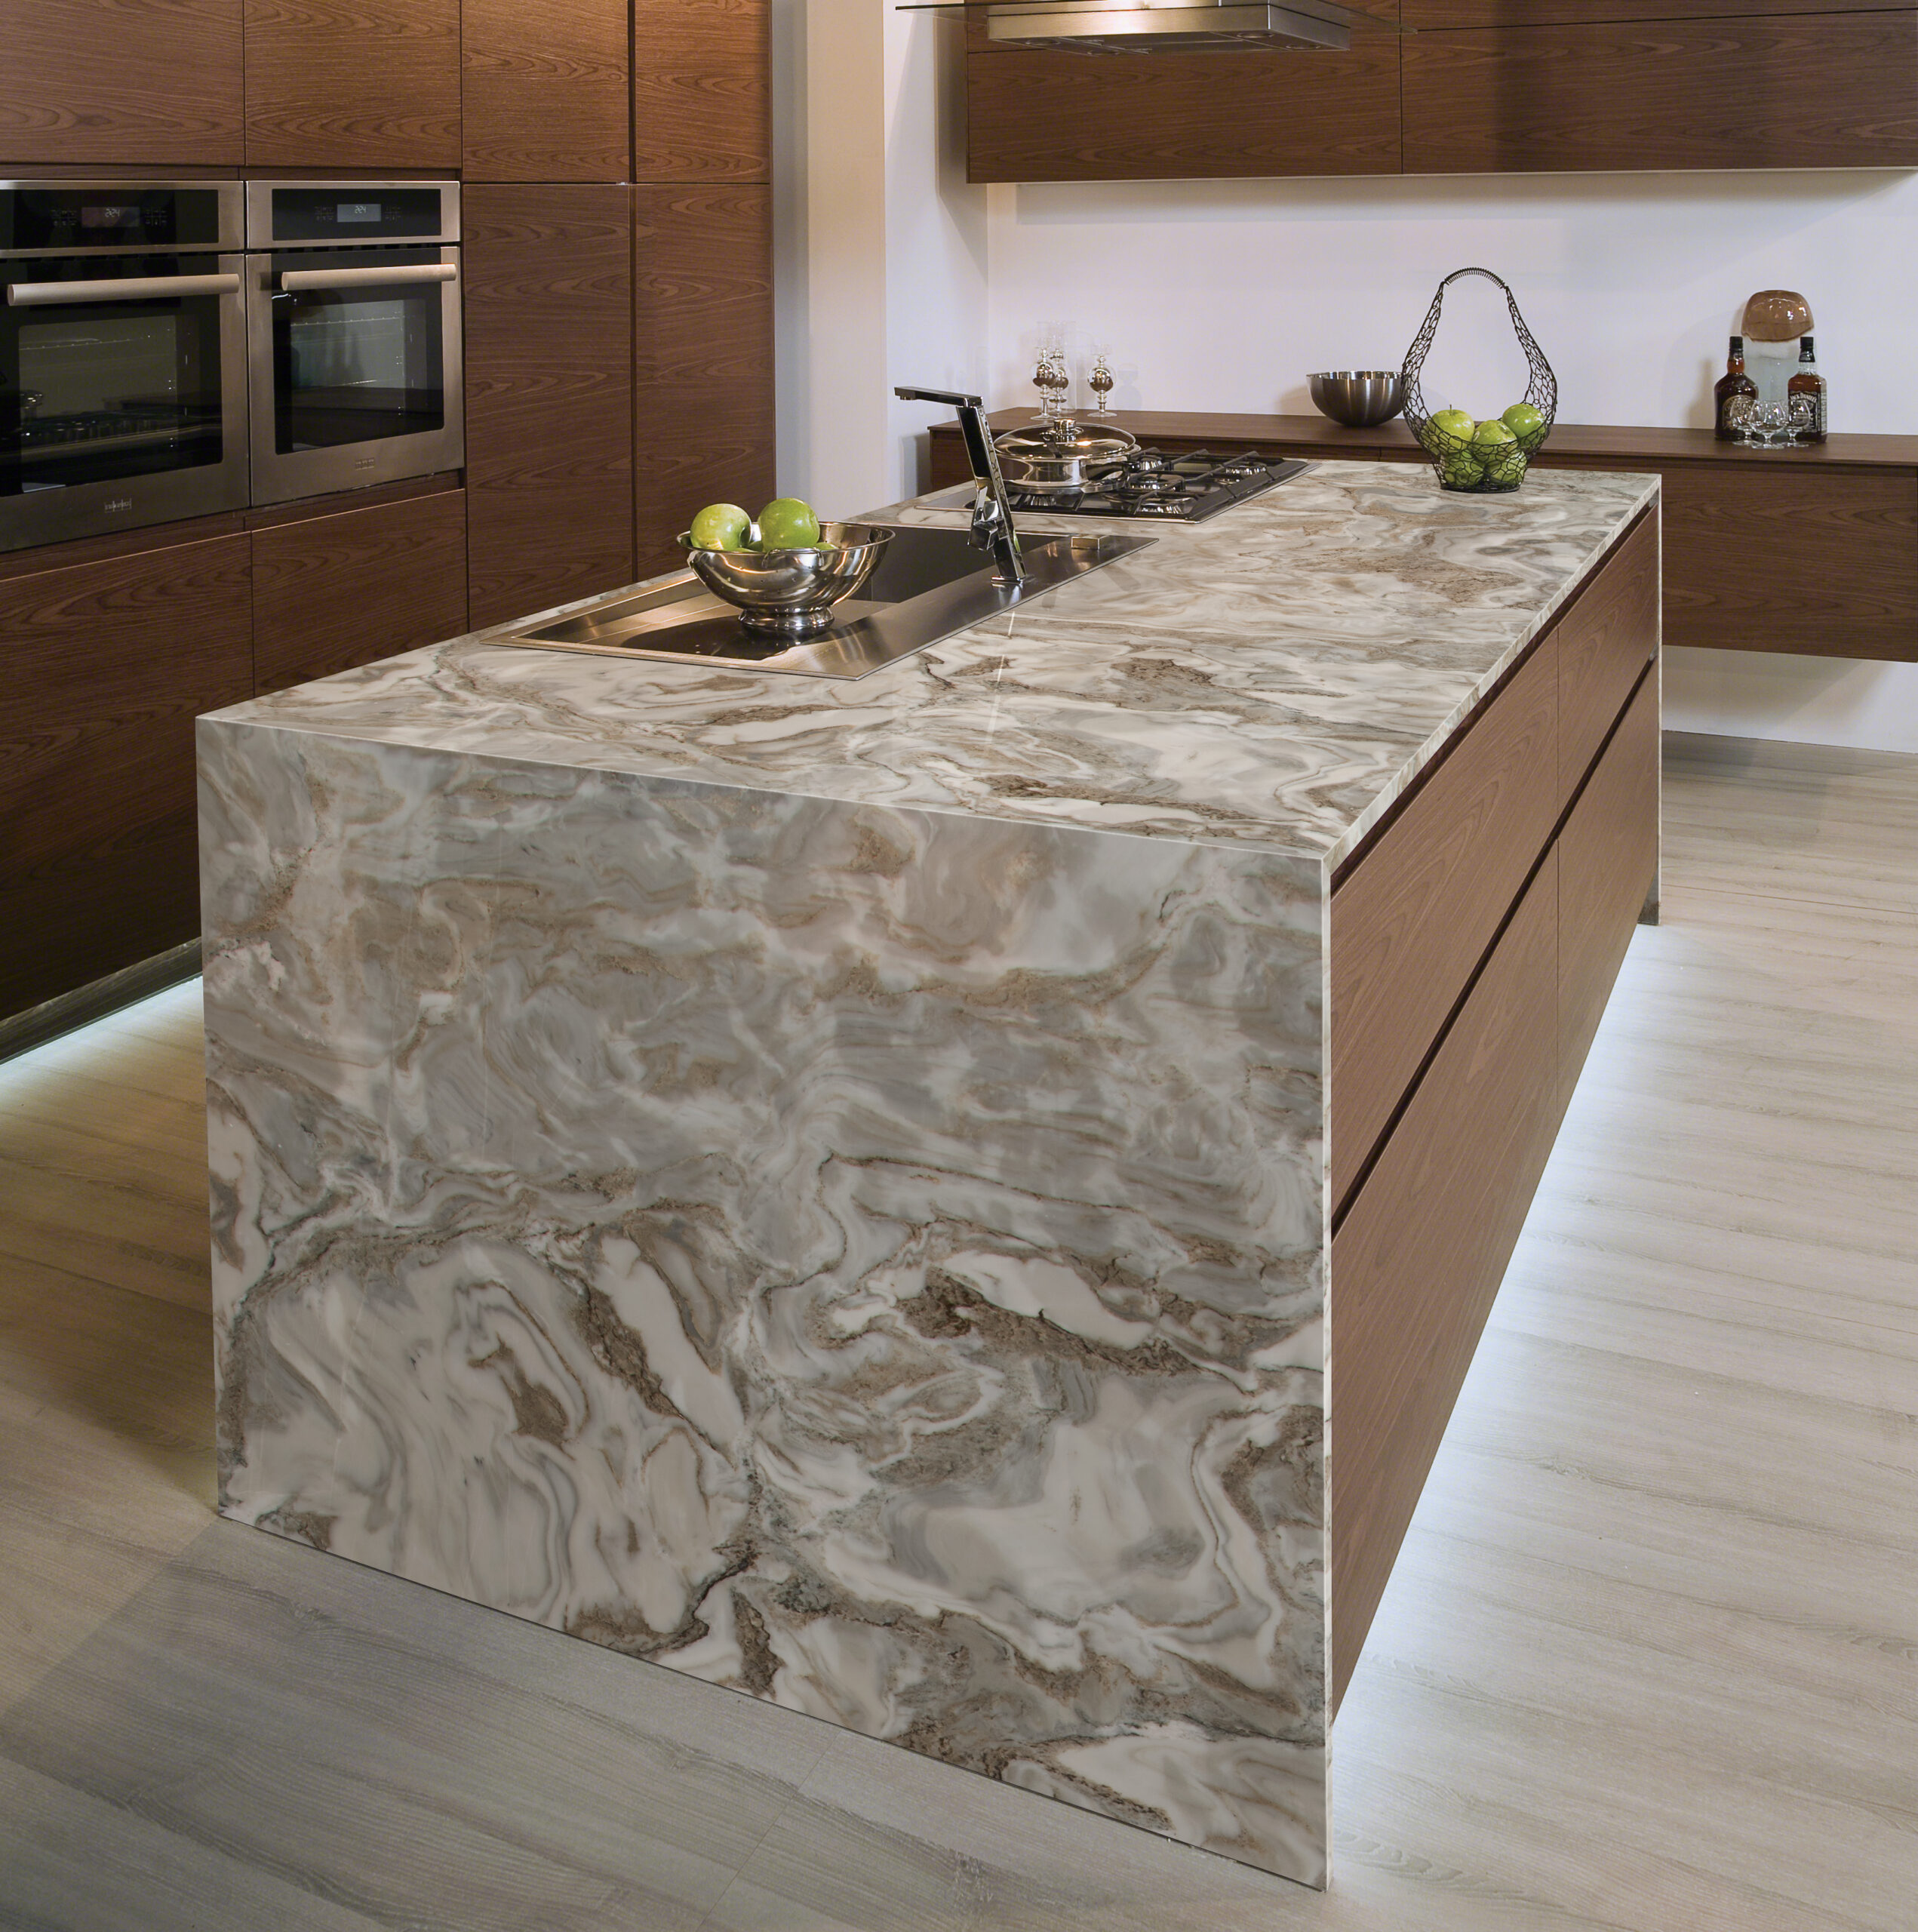 Purchasing Marble at French Creek Designs Countertop Store. Granite, Quartz, Soapstone, Wood